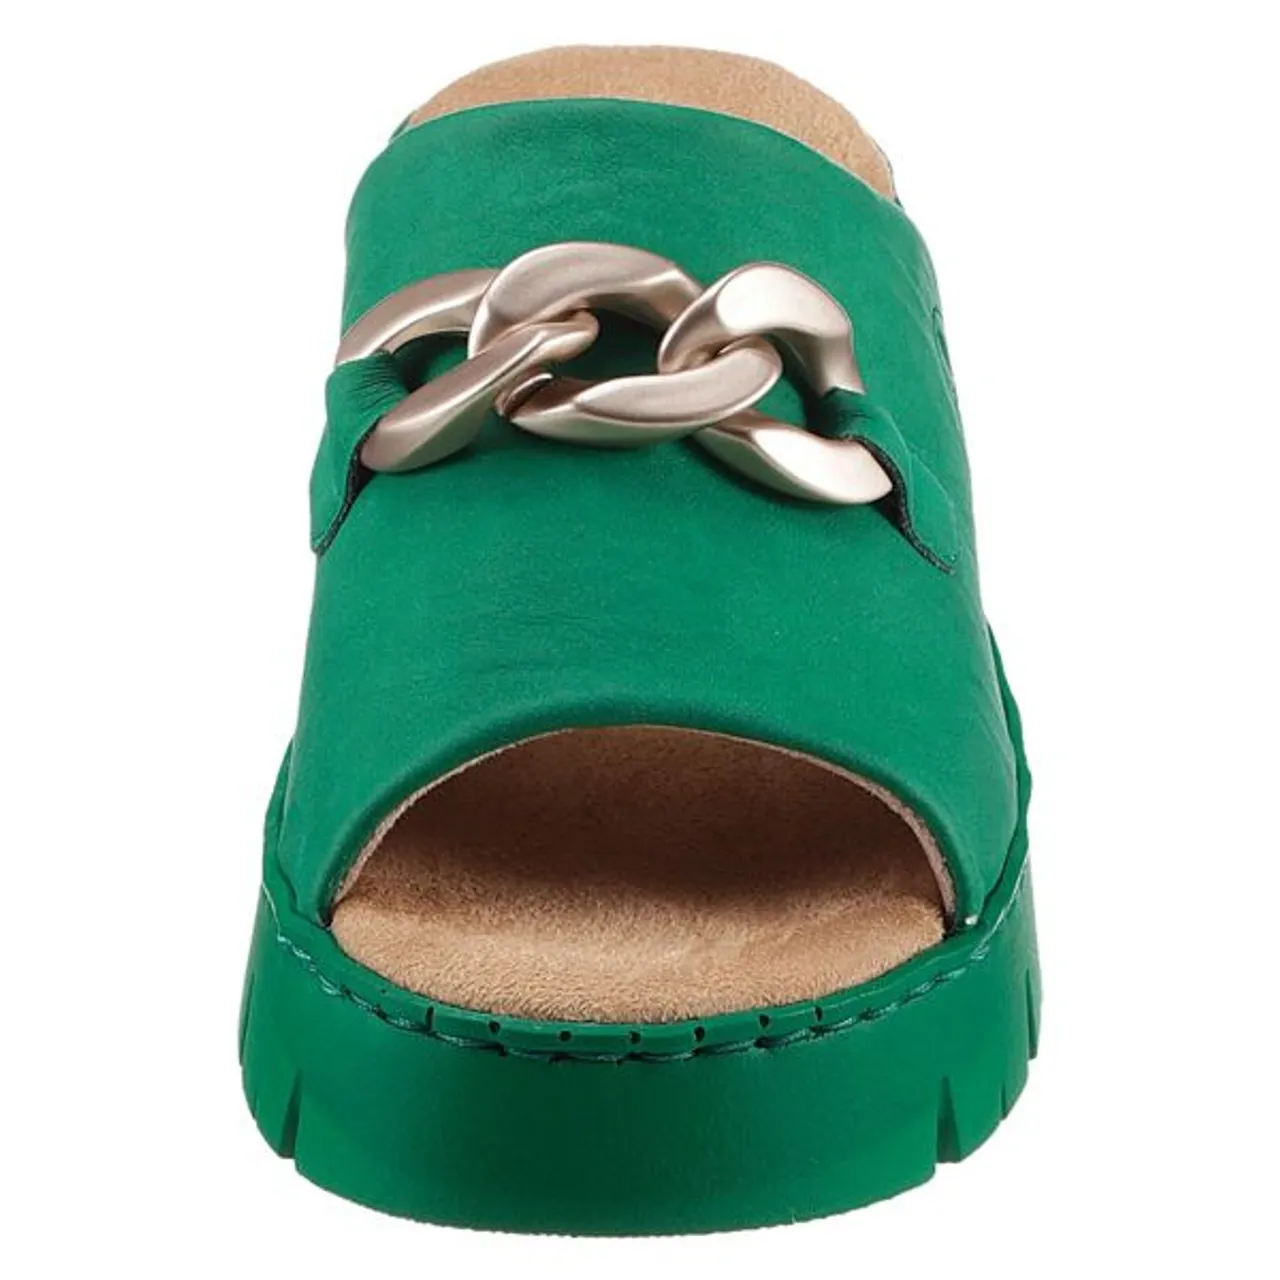 Pantolette RIEKER Gr. 42, grün (smaragd) Damen Schuhe Pantoletten Plateau, Sommerschuh, Schlappen mit weicher Textil-Innensohle